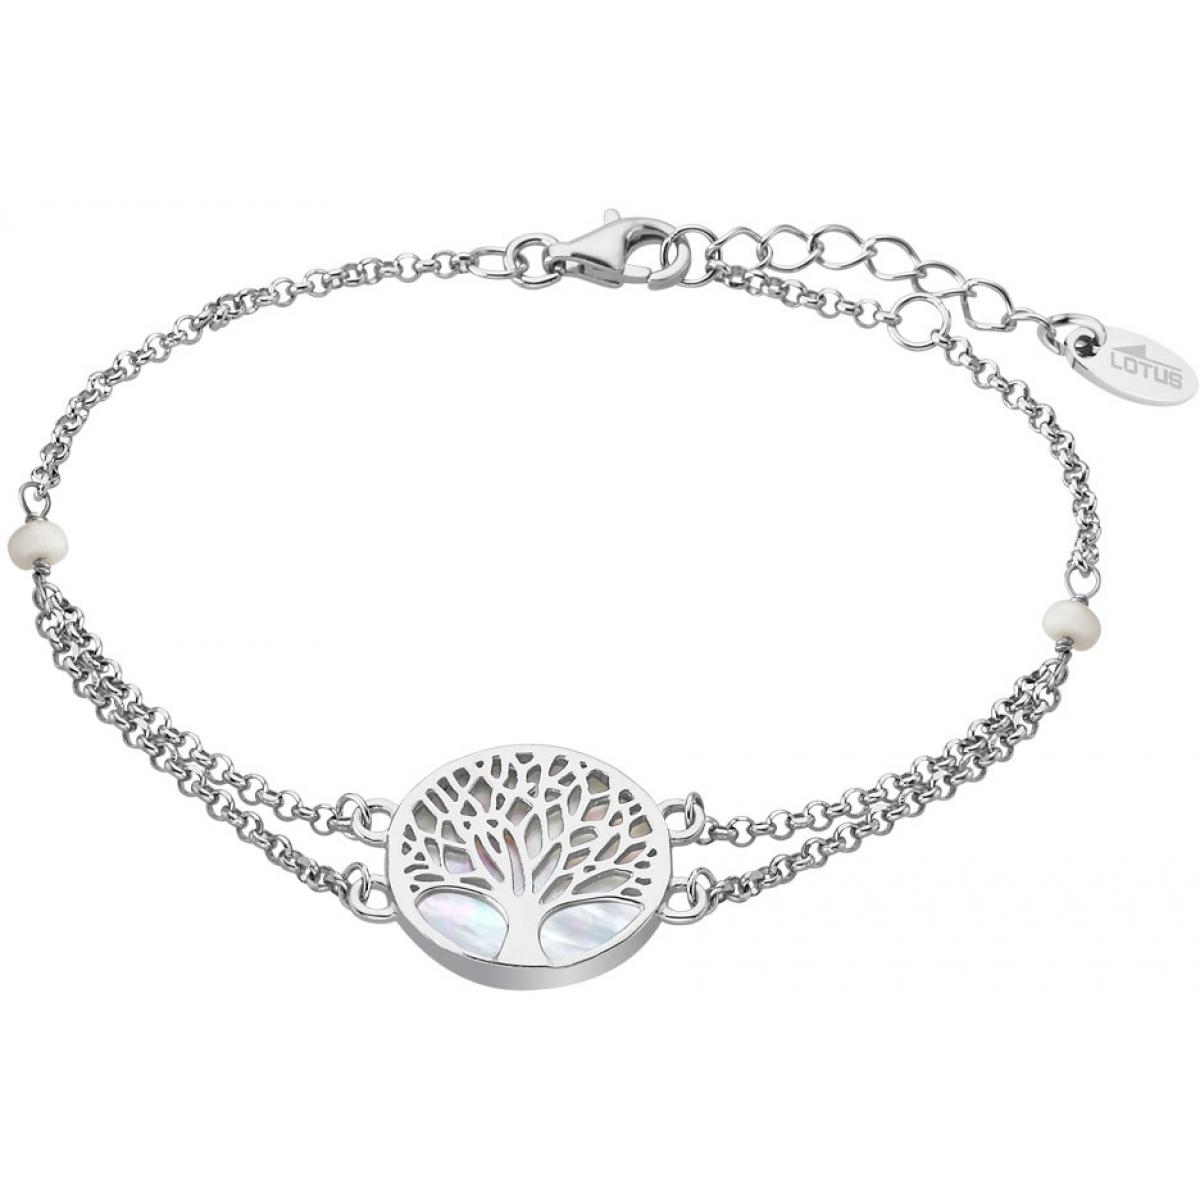 Bracelet Lotus Silver TREE OF LIFE LP1678-2-1 - Bracelet TREE OF LIFE Argent Femme